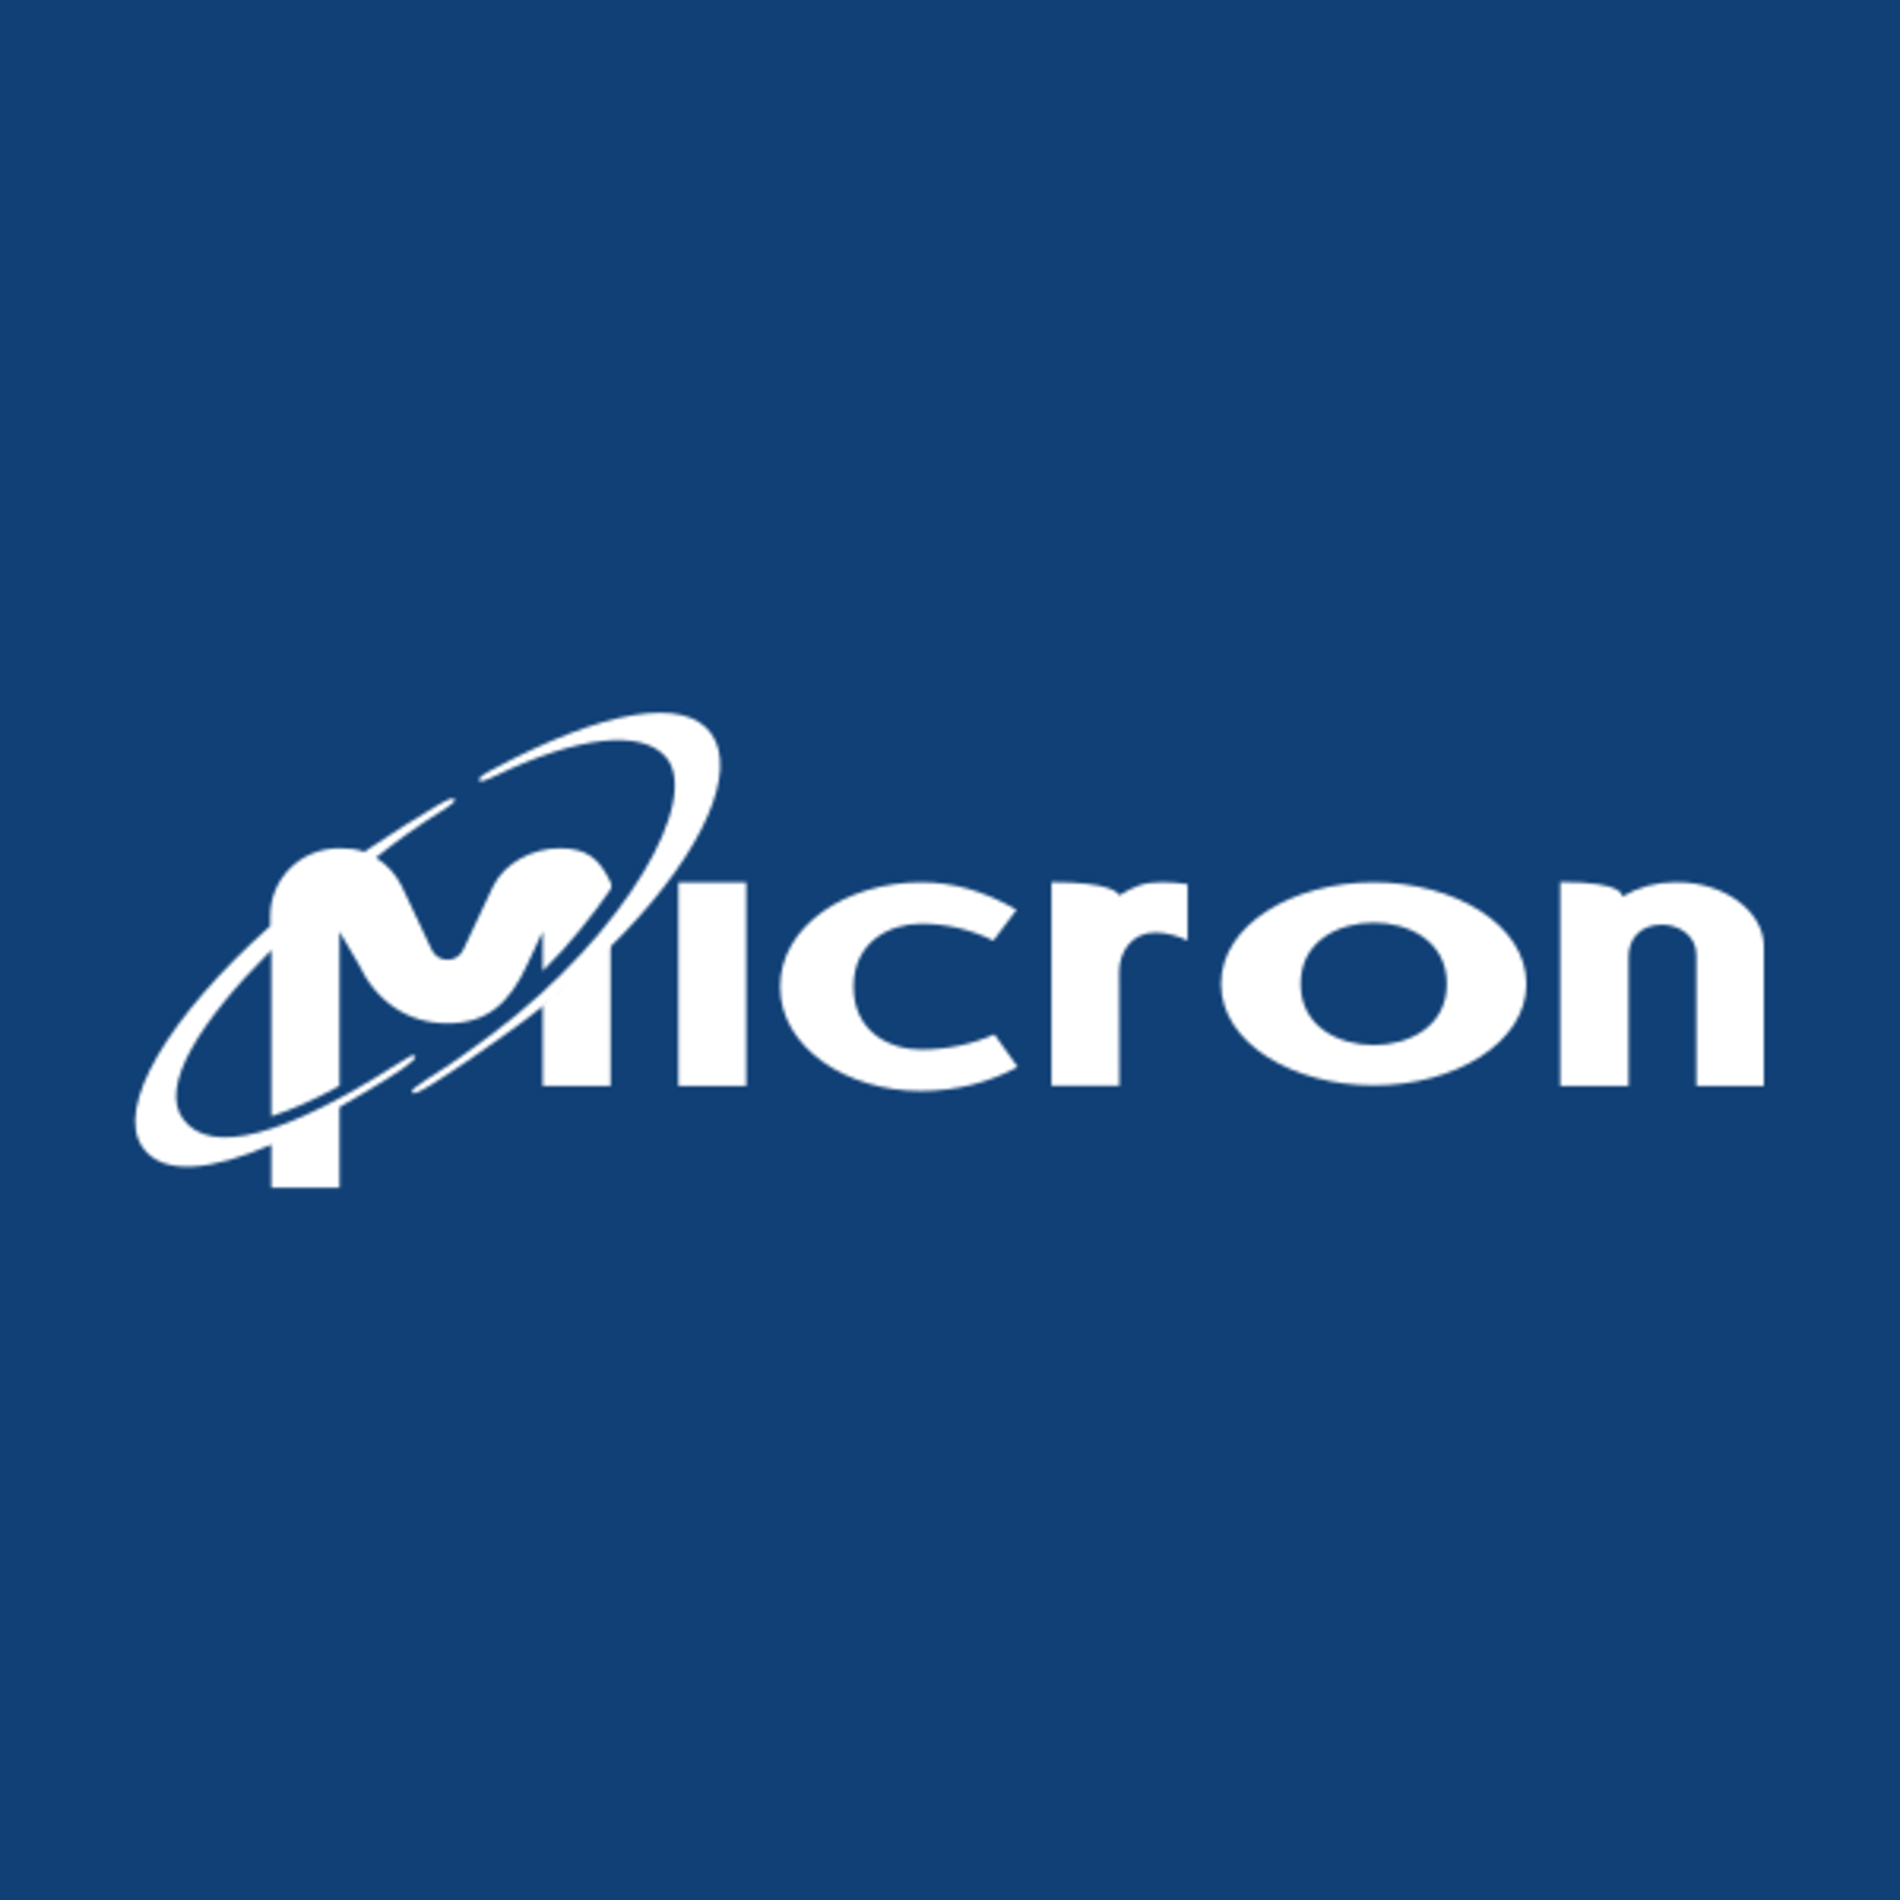 Micron Technology веде змагання за лідерство на ринку пам’яті HBM